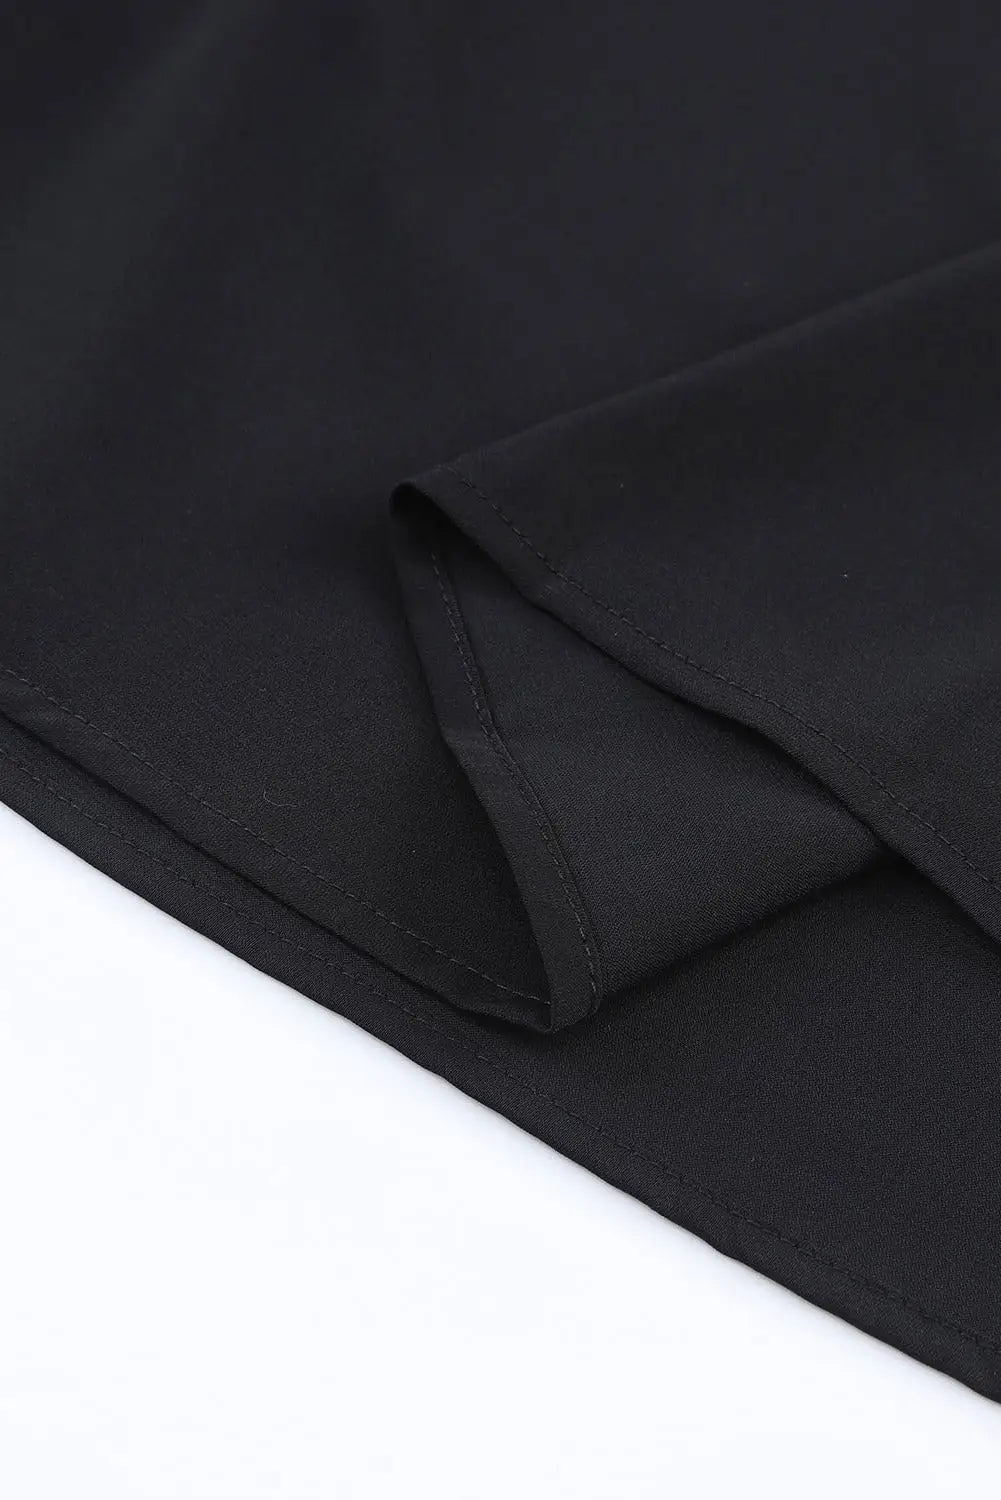 Black knotted asymmetric off shoulder blouse - blouses & shirts